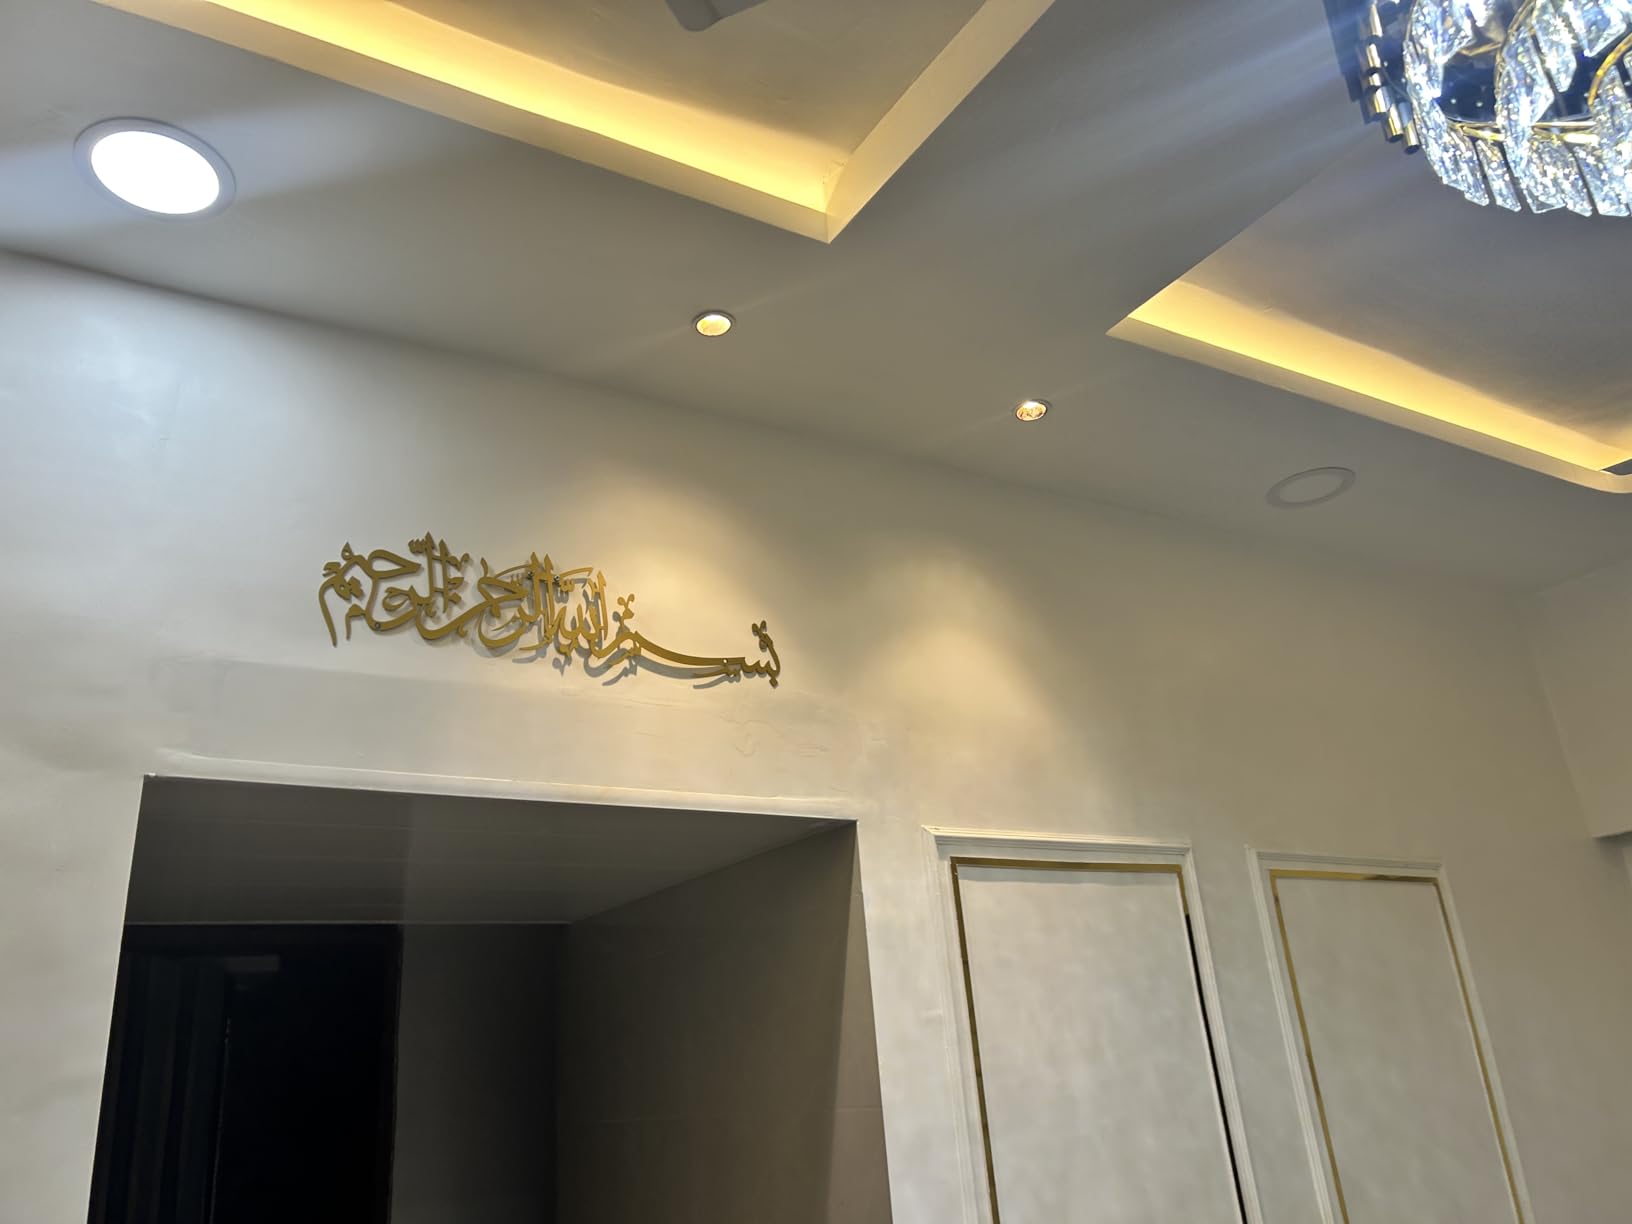 Bismillah Islamic metal Wall Art | Arabic calligraphy metal Wall Art (star product)